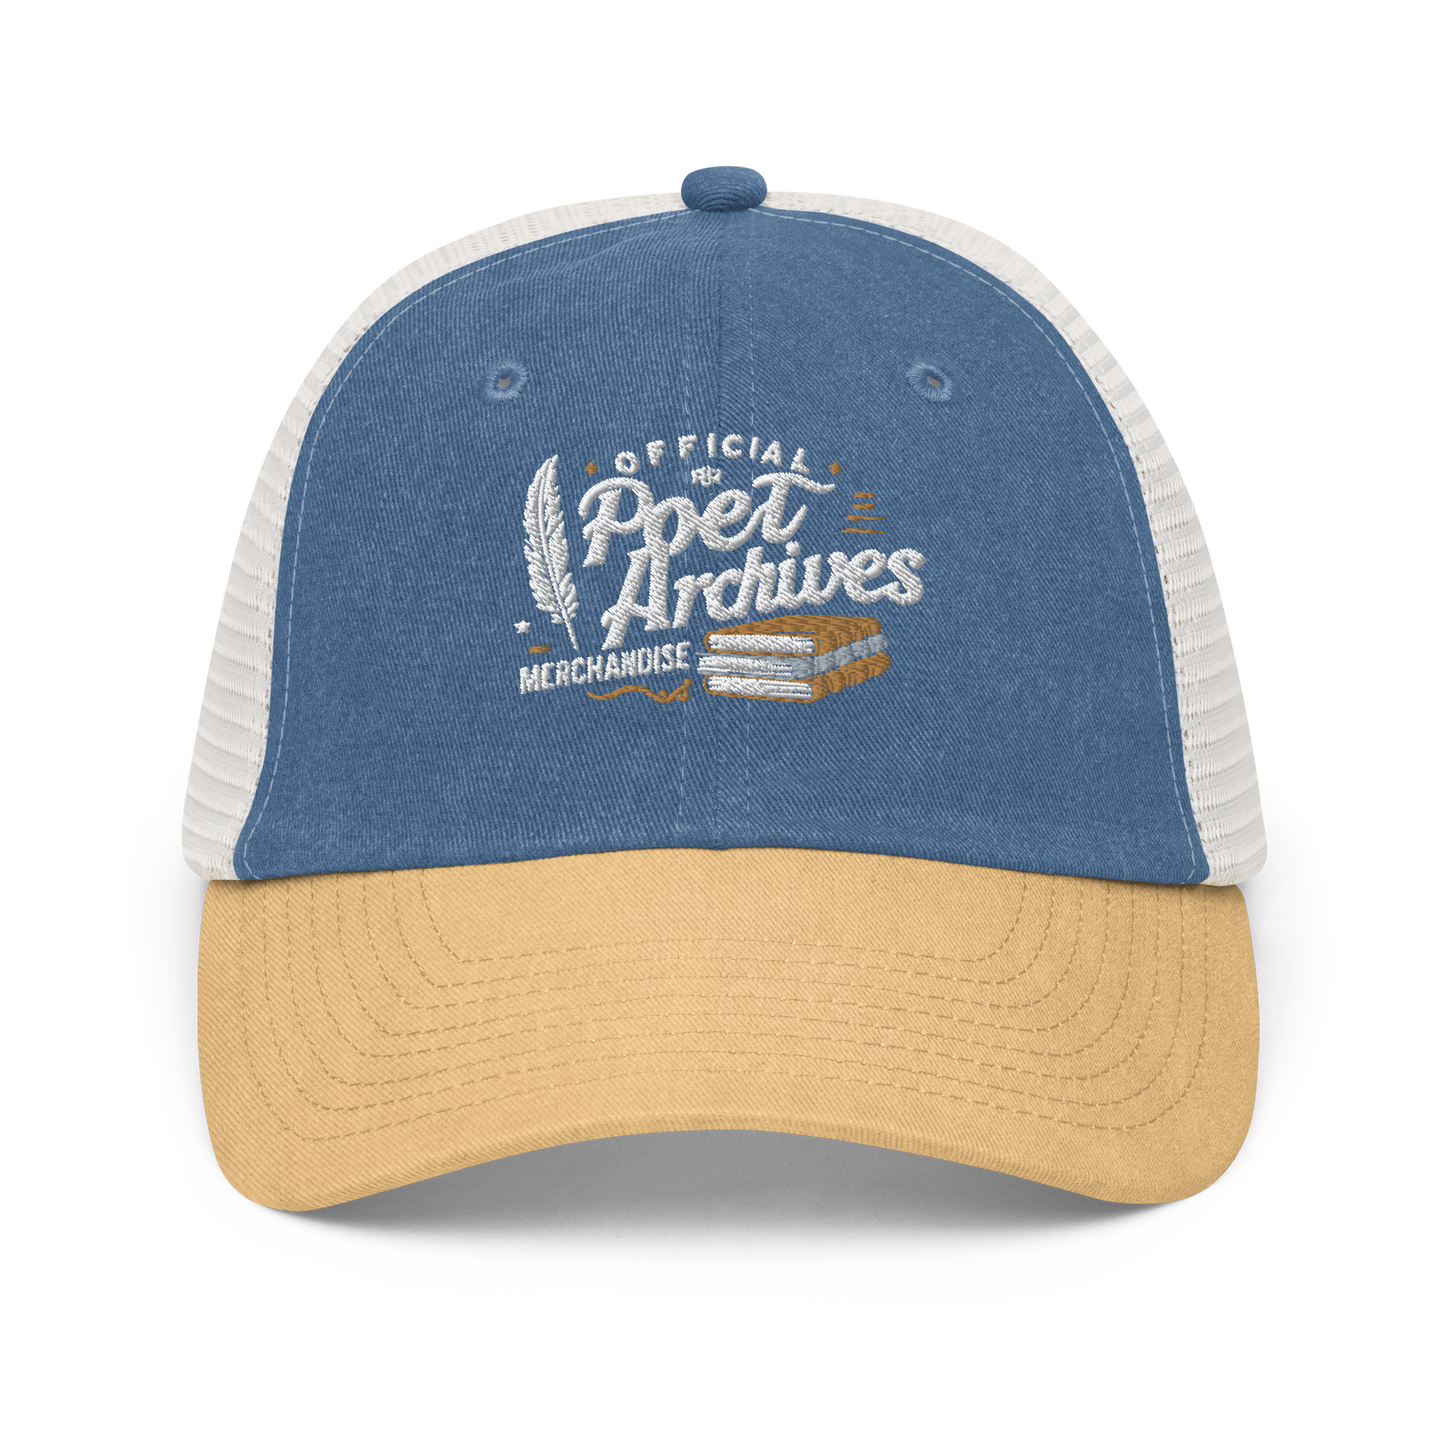 Official Merchandise Mesh cap